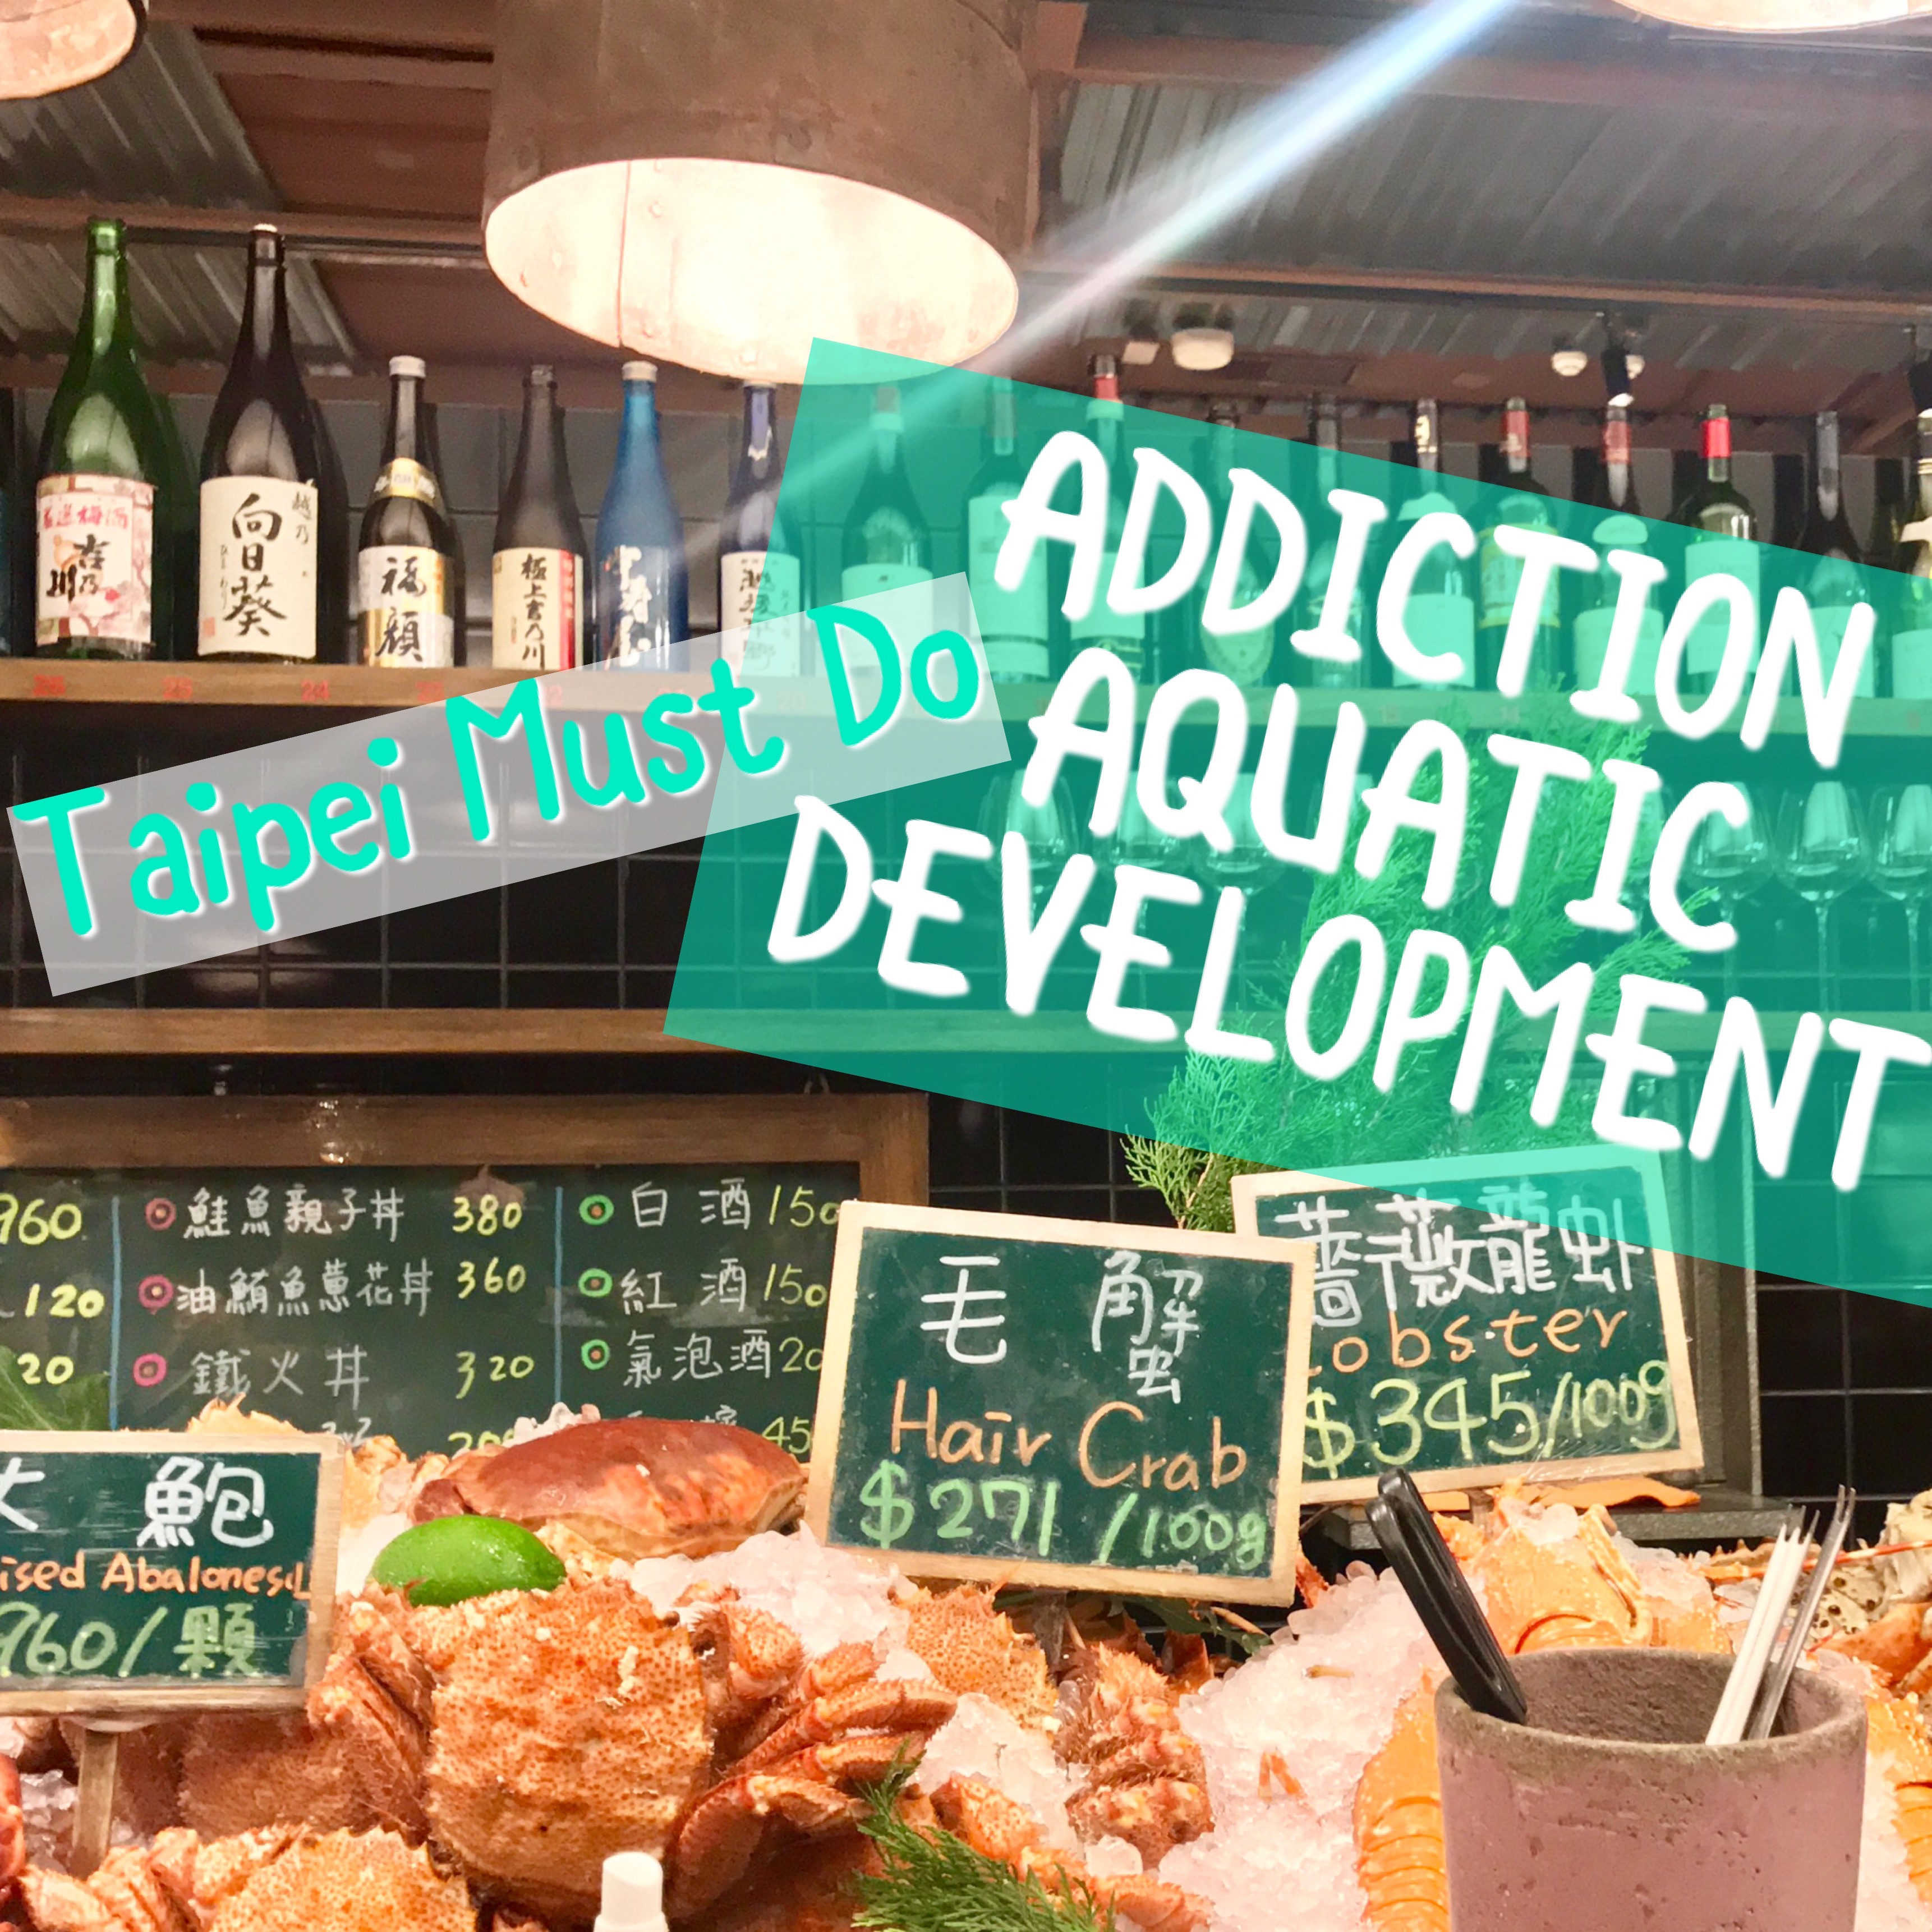 Taipei’s Addiction Aquatic Development 上引水產